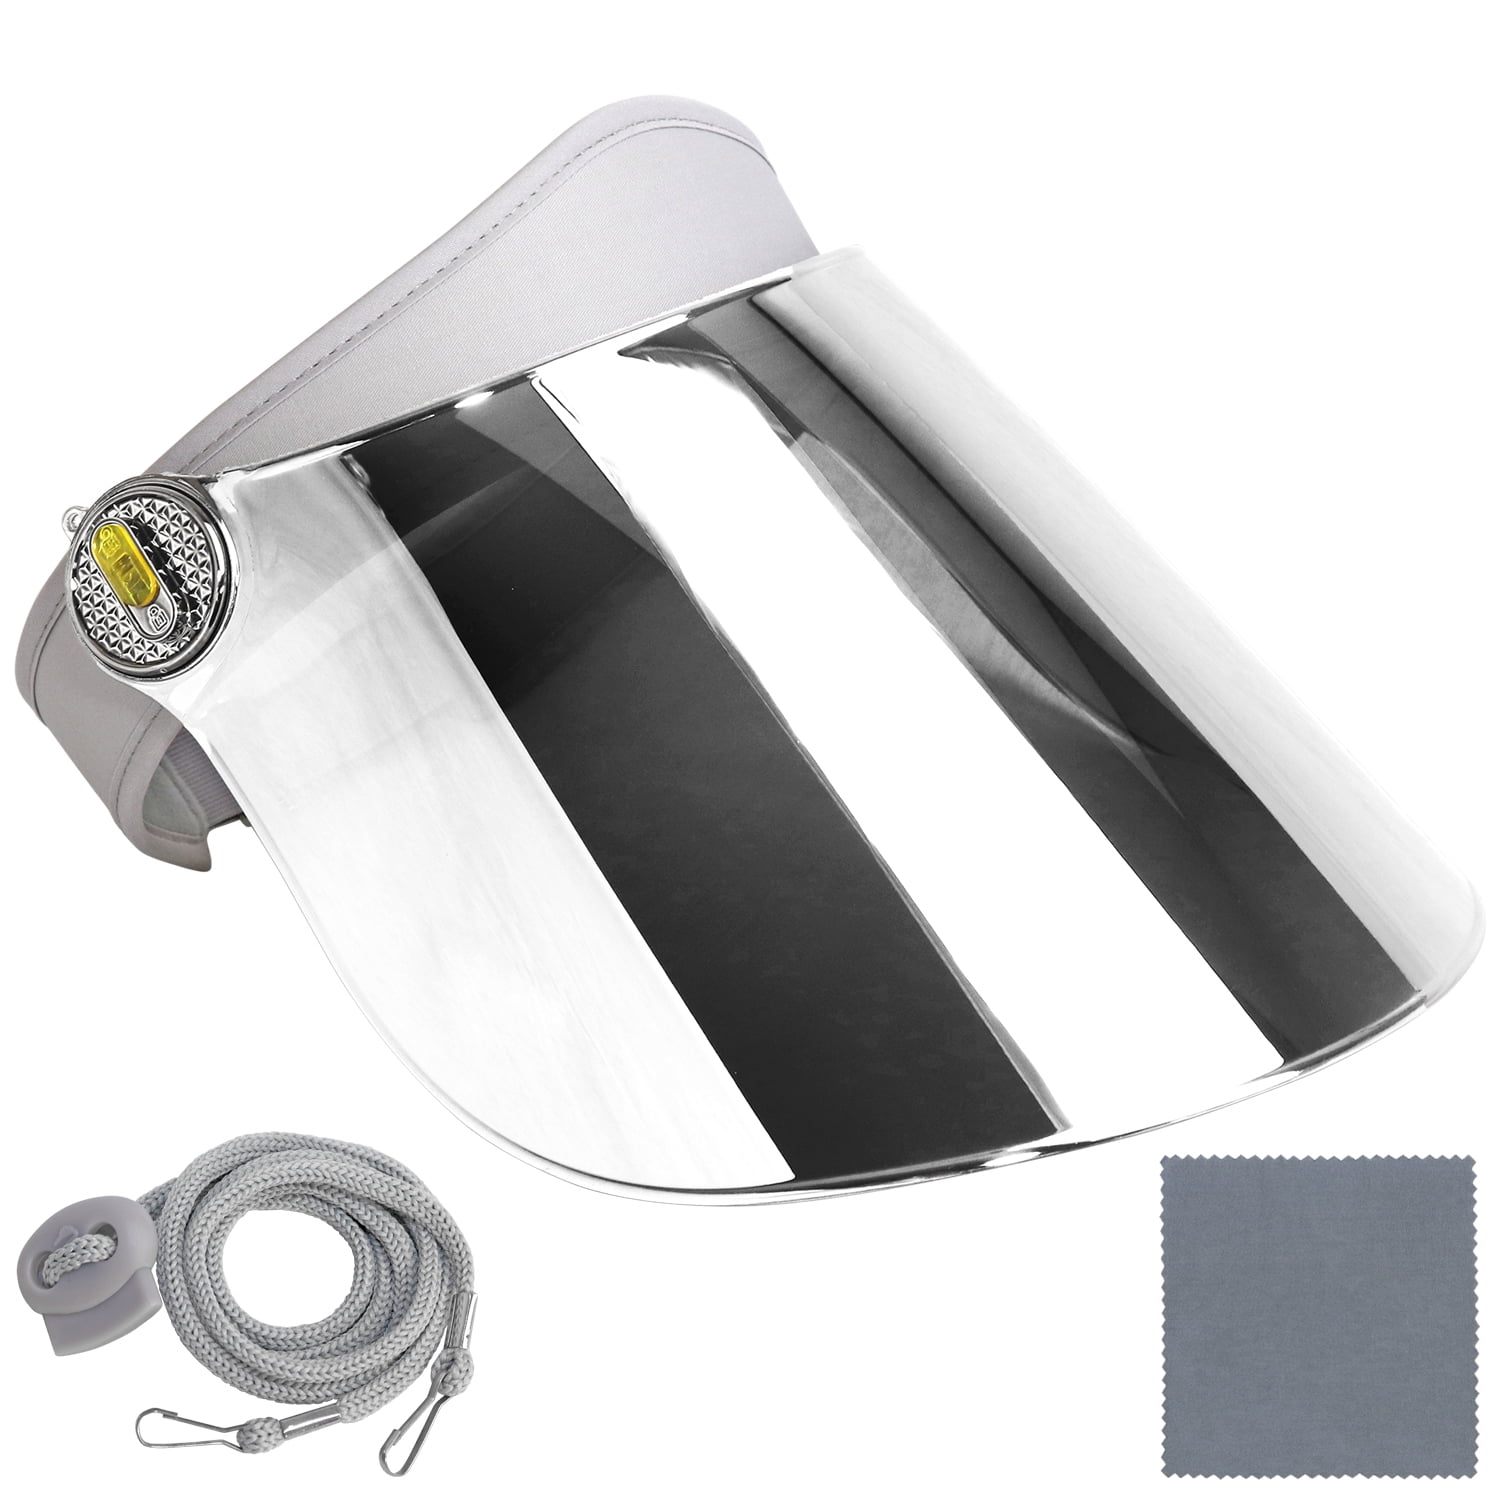 Sun Visor Hat Cap UV Protection - Premium Adjustable Headband Face Shield  Mirrored (Light Blue) 